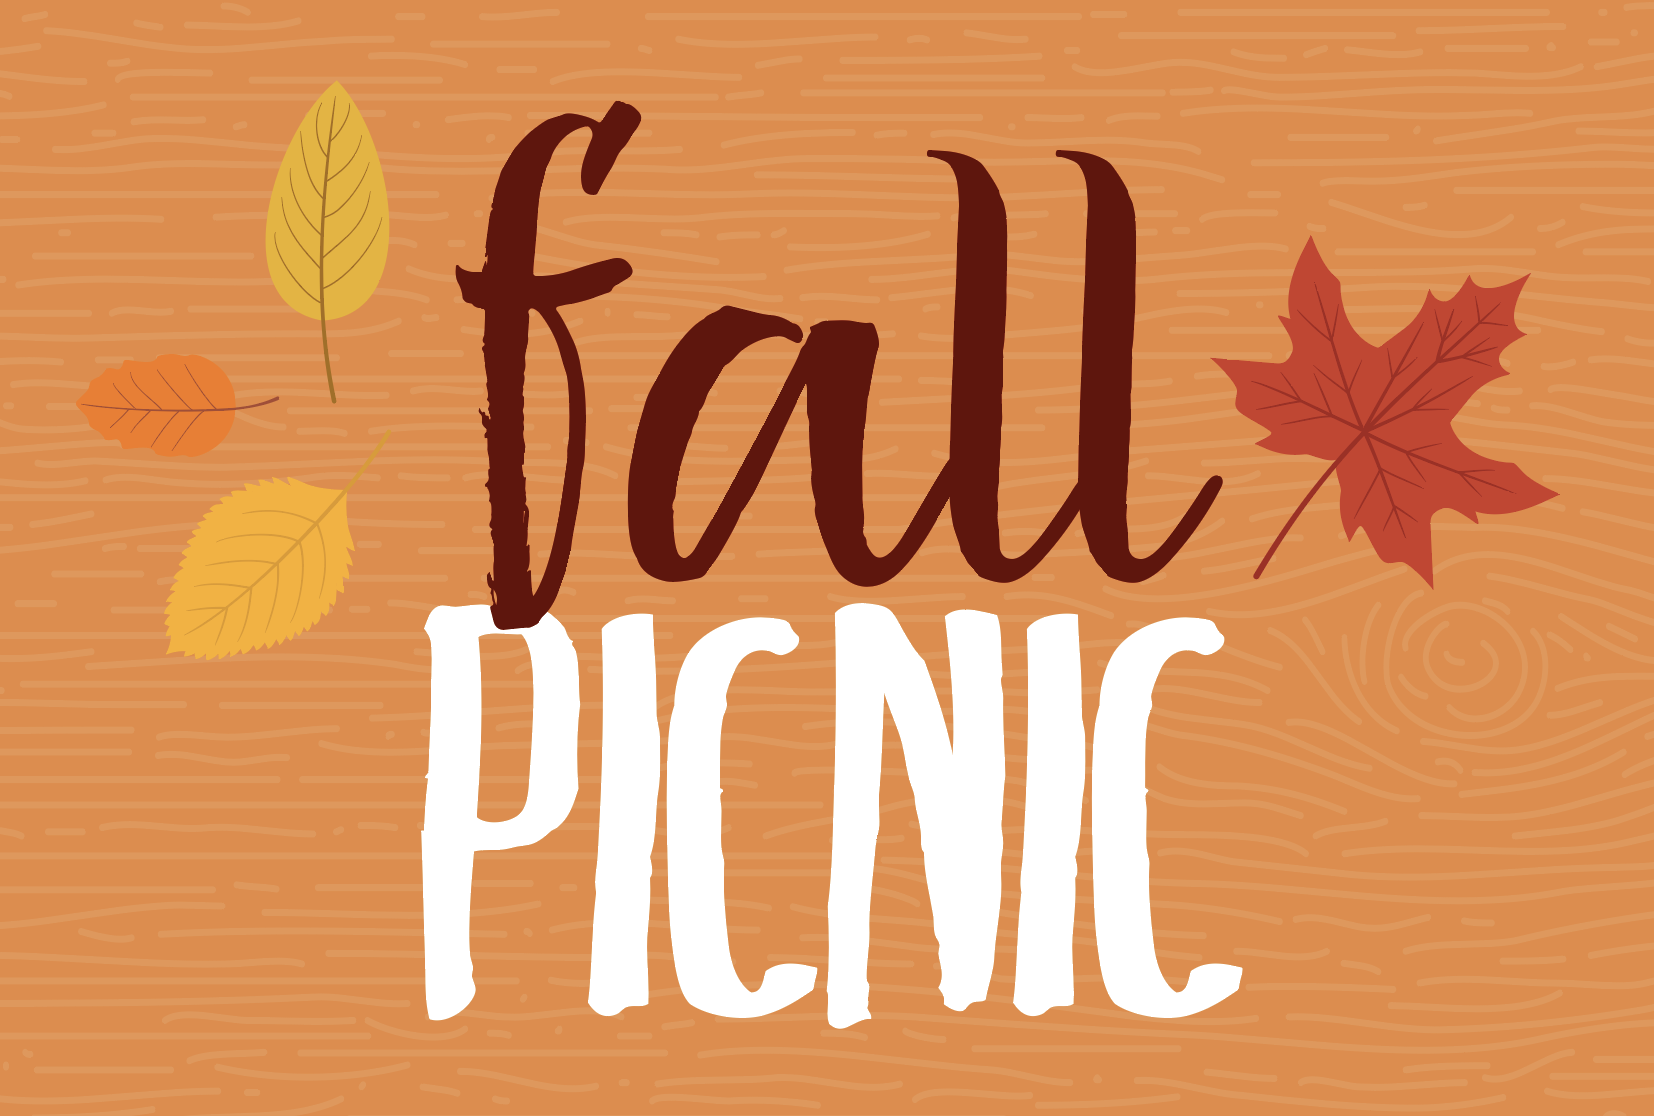 fall_picnic image